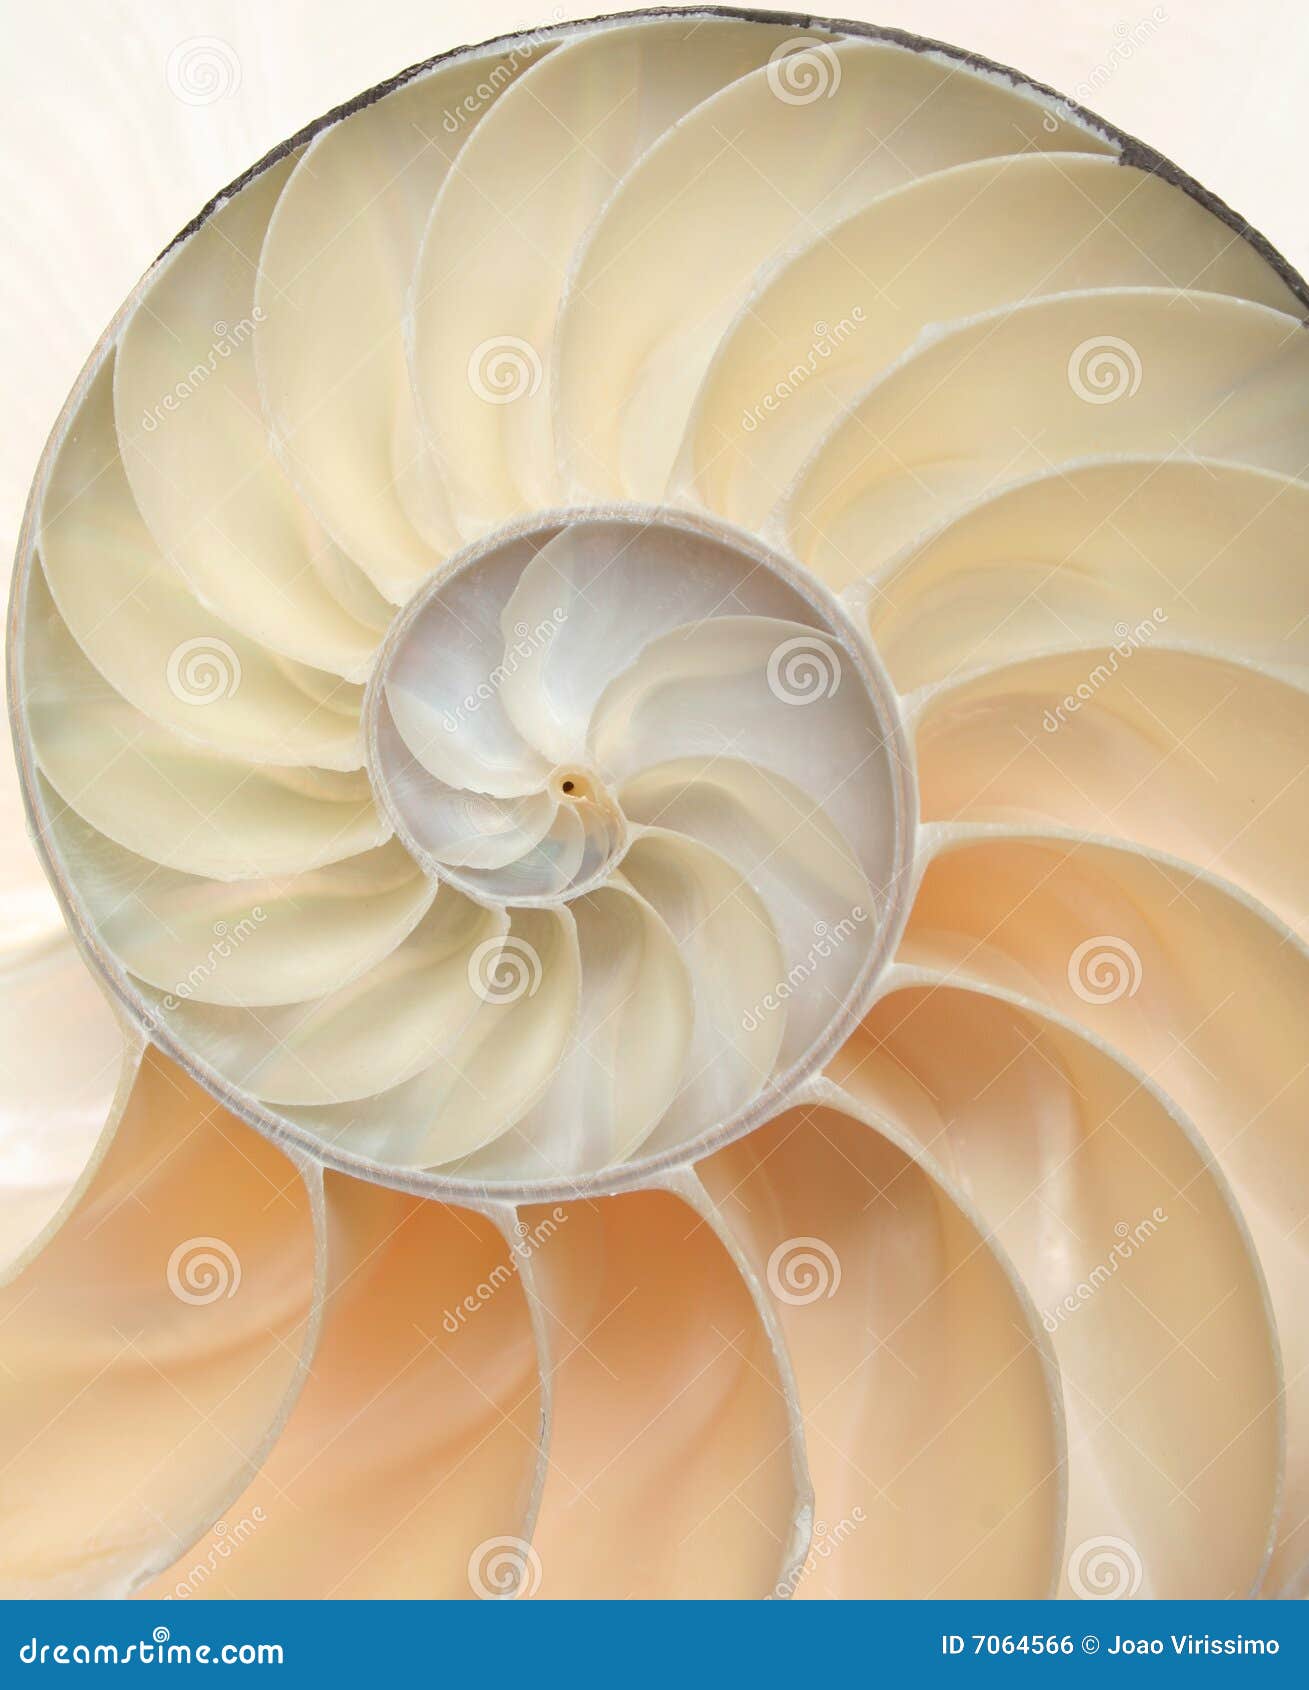 nautilus shell macro close-up